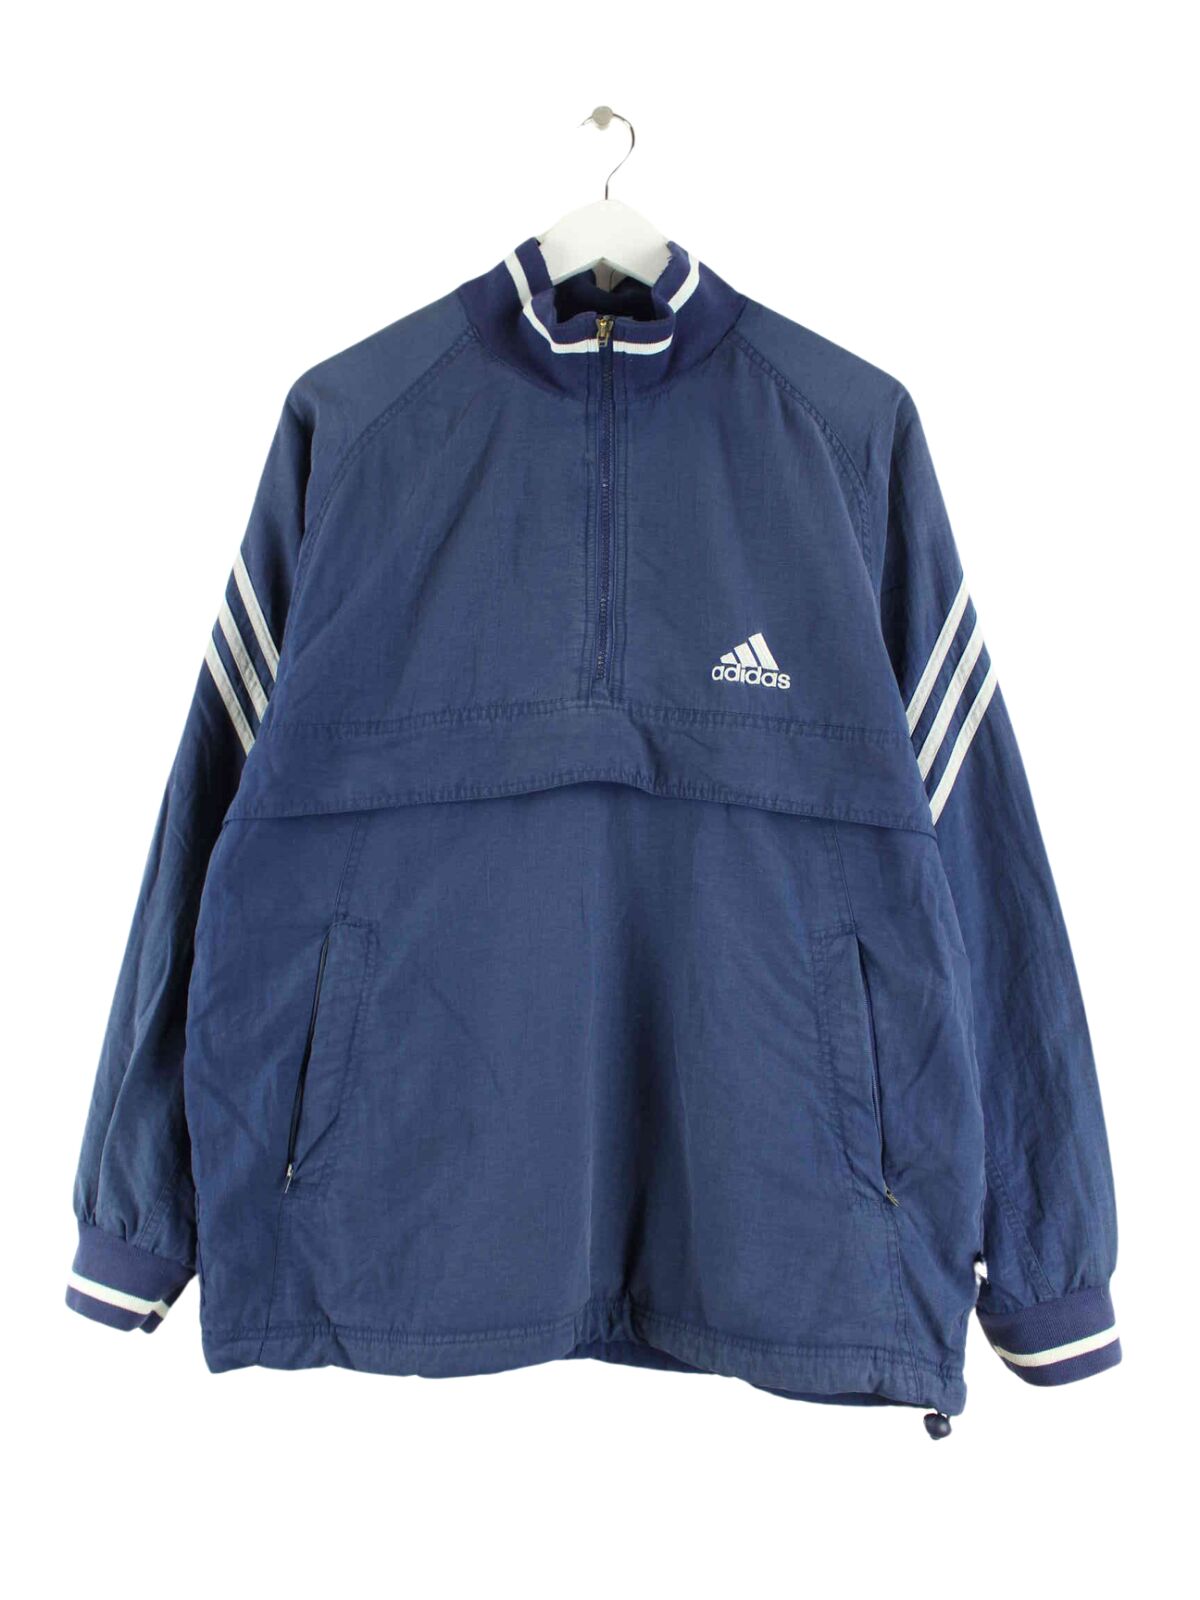 Adidas 90s Vintage 3-Stripes Jacke Blau M (front image)